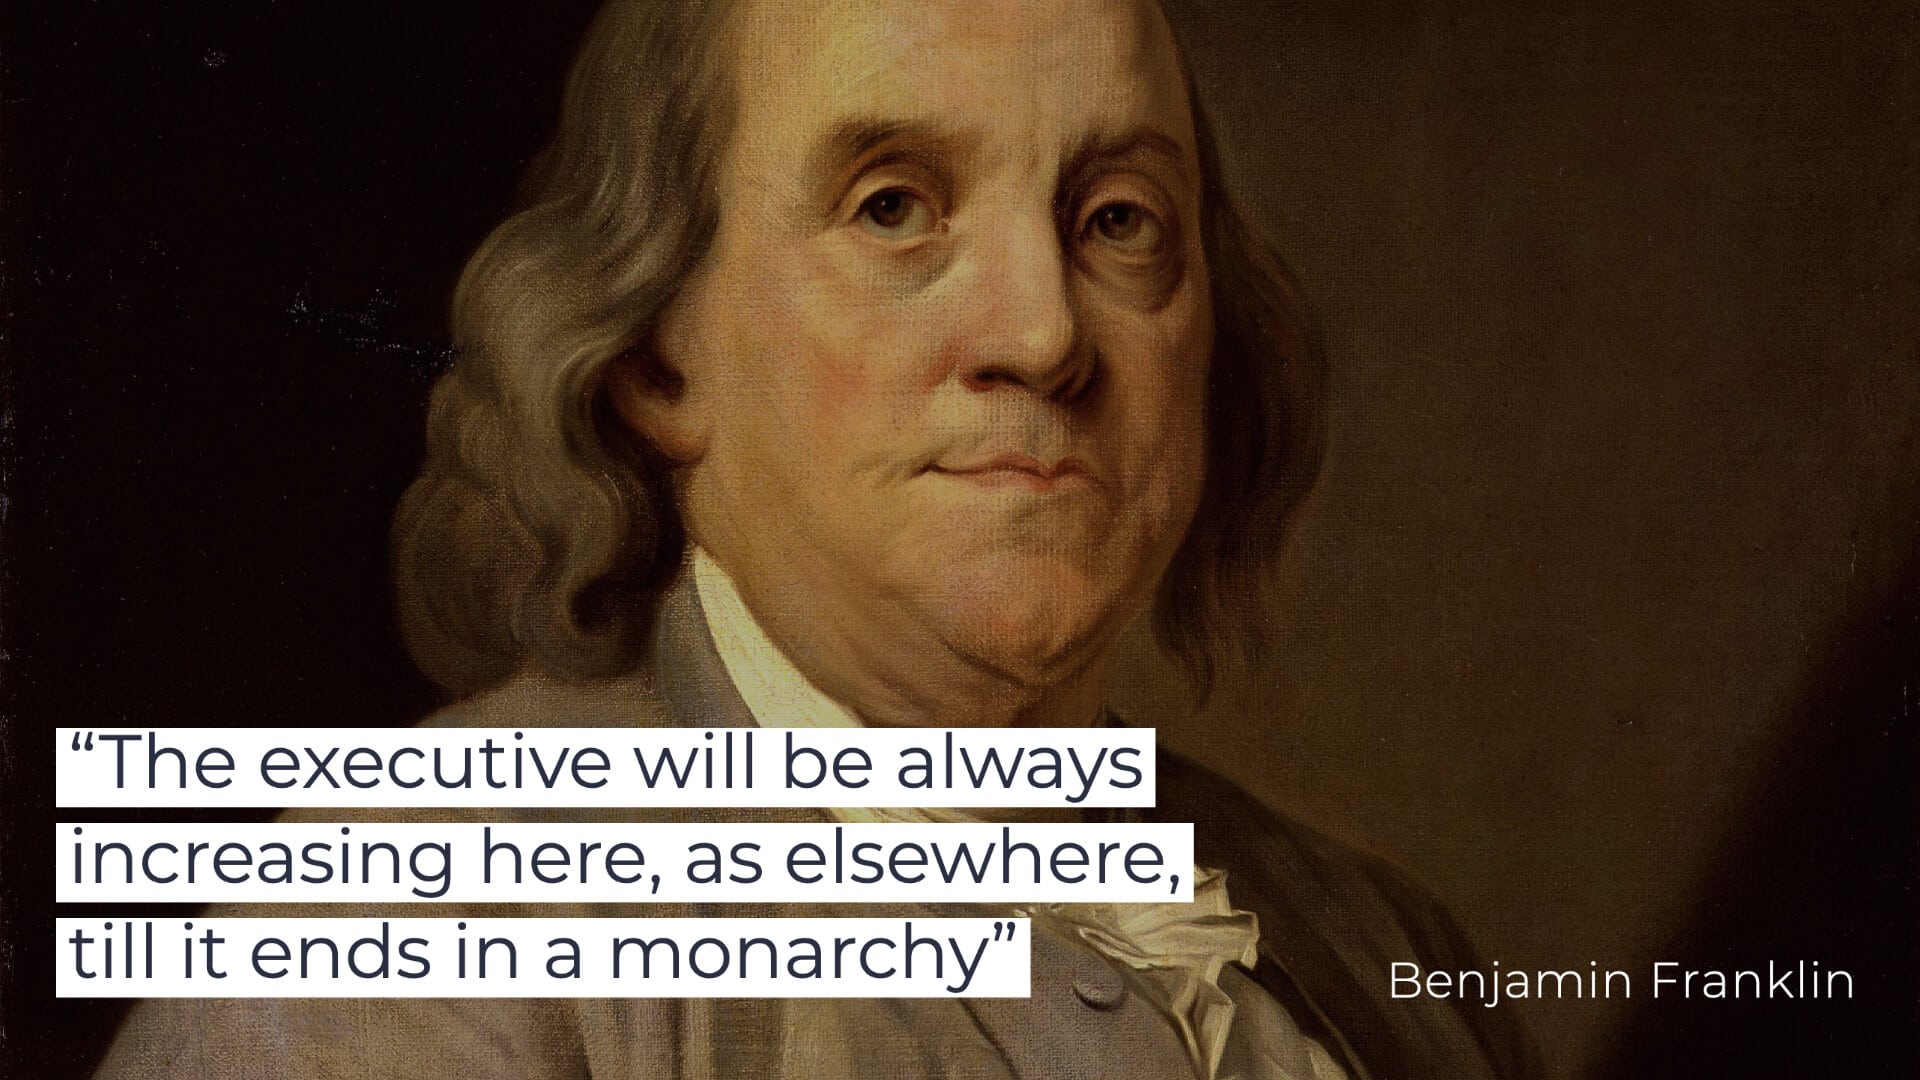 Benjamin Franklin’s Warnings on Executive Power